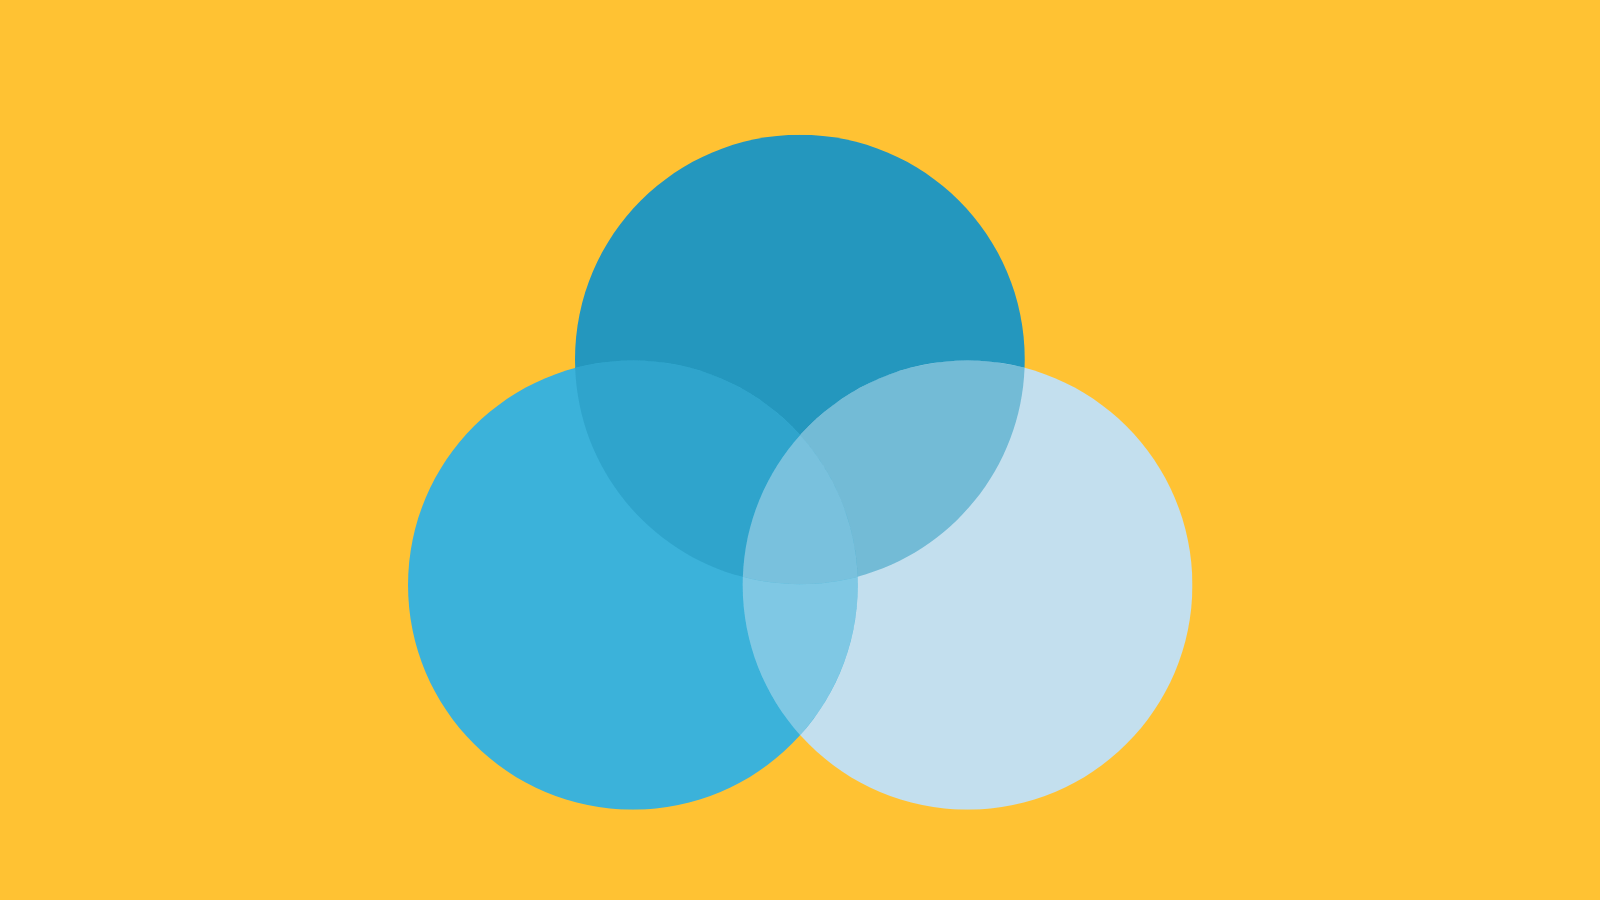 A Venn diagram with three overlapping circles